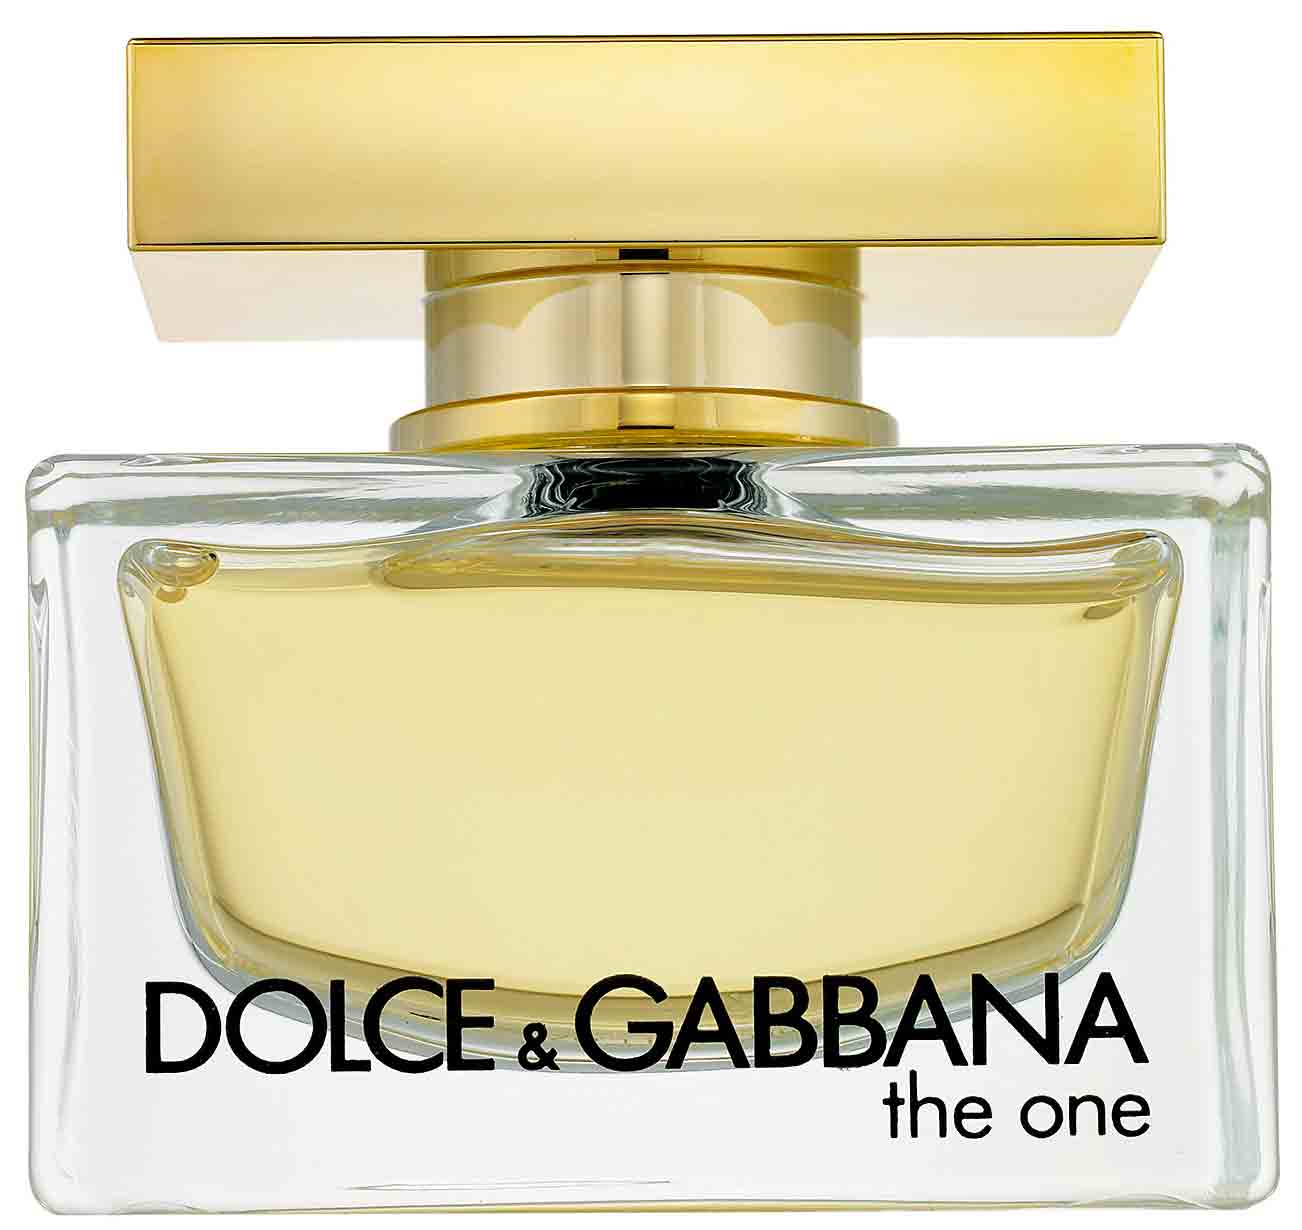 best most popular men perfumes in pakistan, latest men fragrances